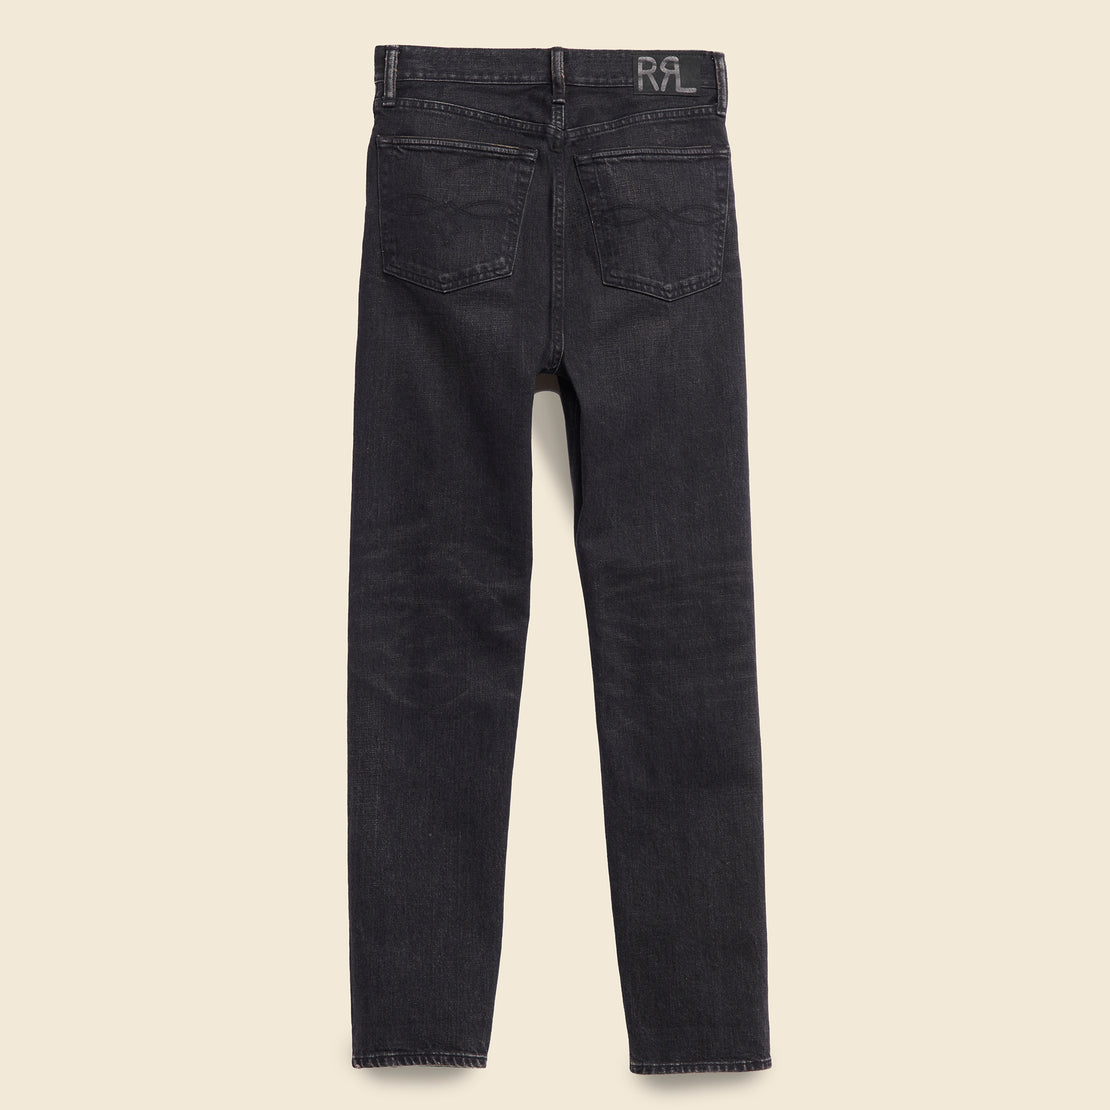 Vintage Straight Jean - Maddison Black - RRL - STAG Provisions - W - Pants - Denim